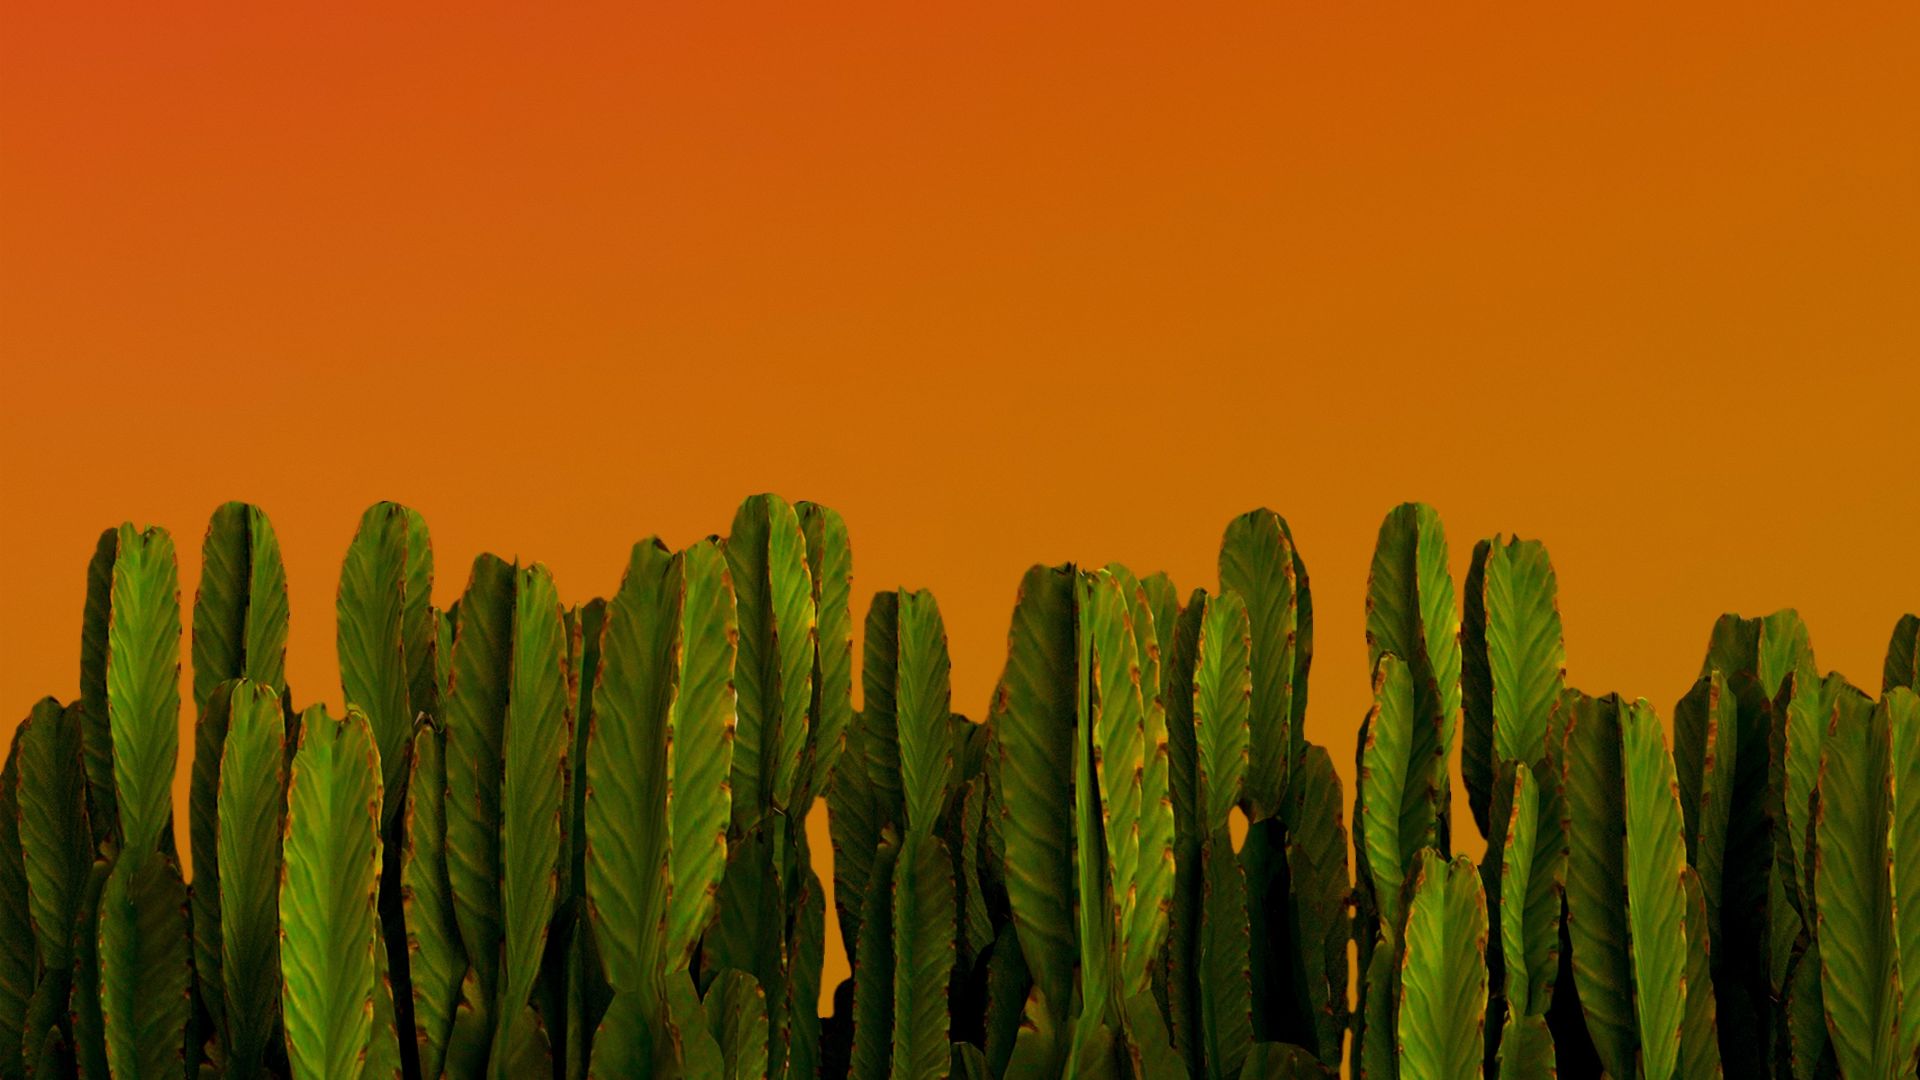 Cactus, green plants, desert plants wallpaper, HD image, picture, background, 2ce985